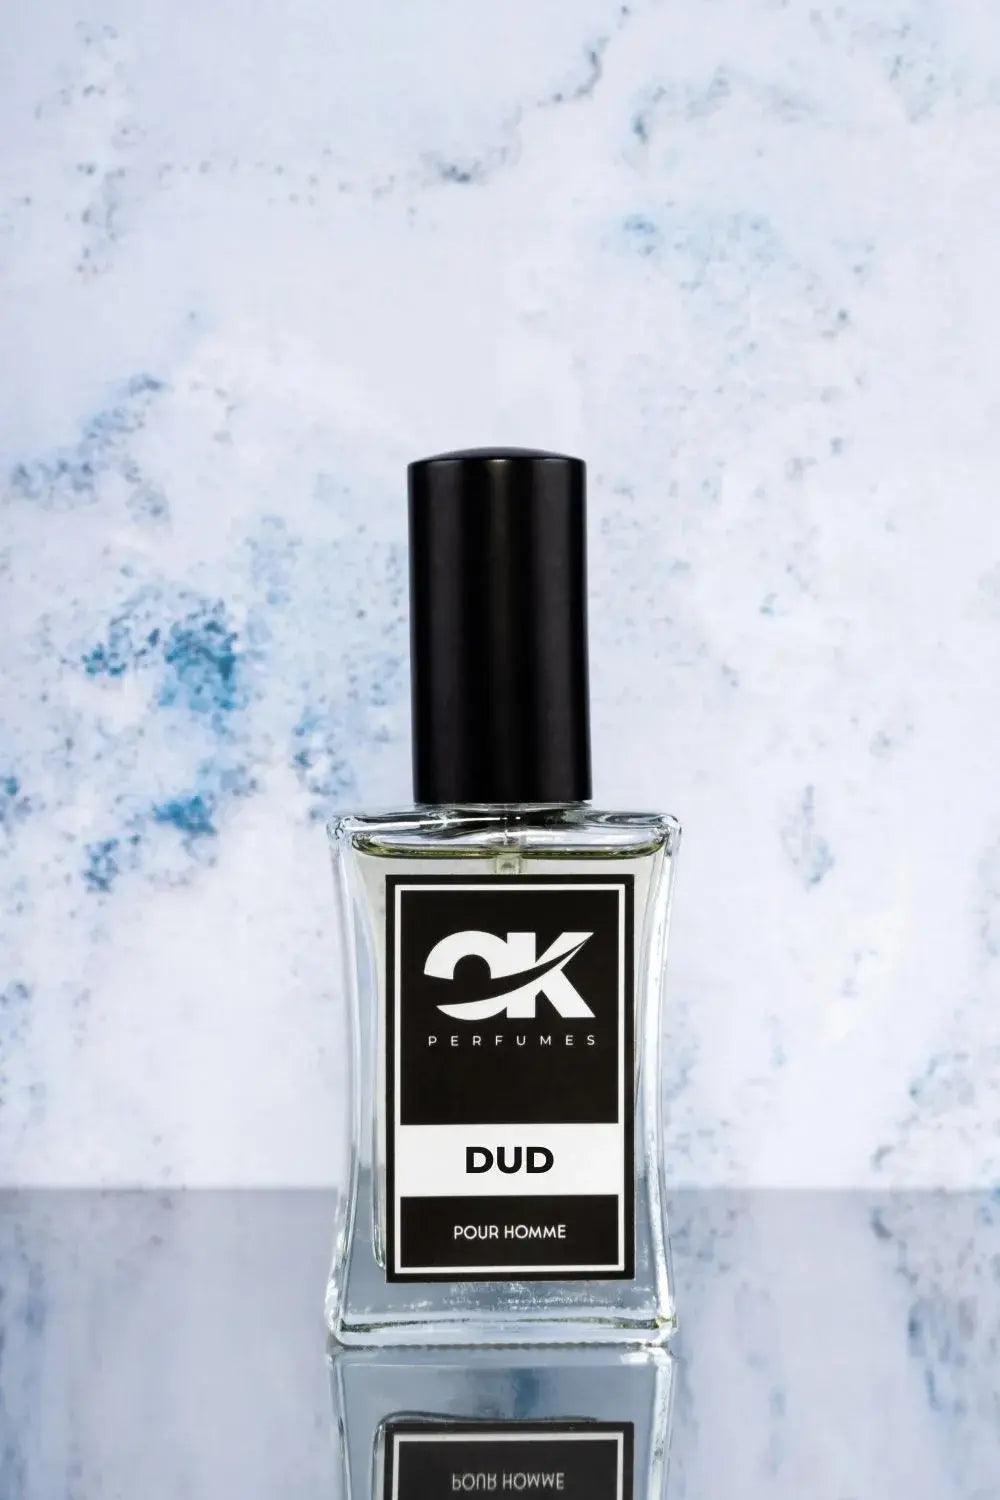 DUD - recuerda a Dune Pour Homme de Dior